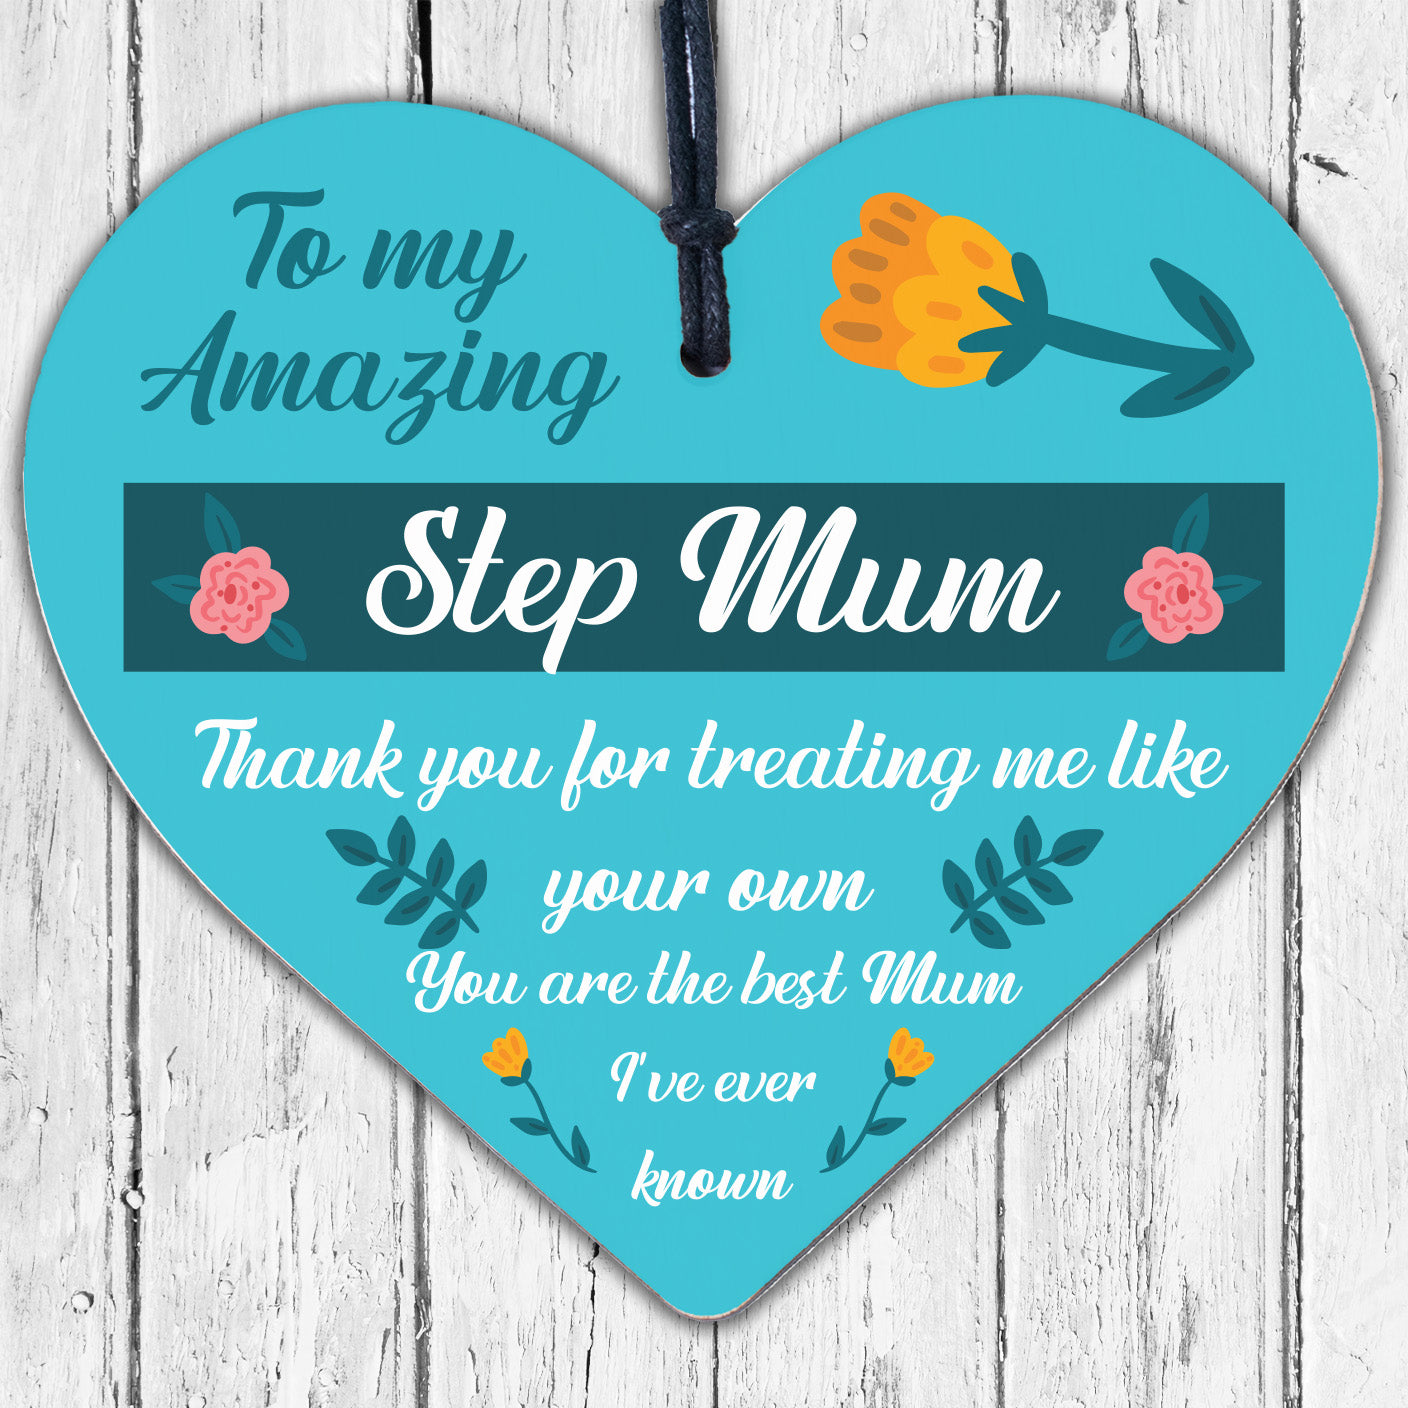 Handmade Amazing Step Mum Heart Plaque Gifts For Mum Best Friend Birthday Gifts